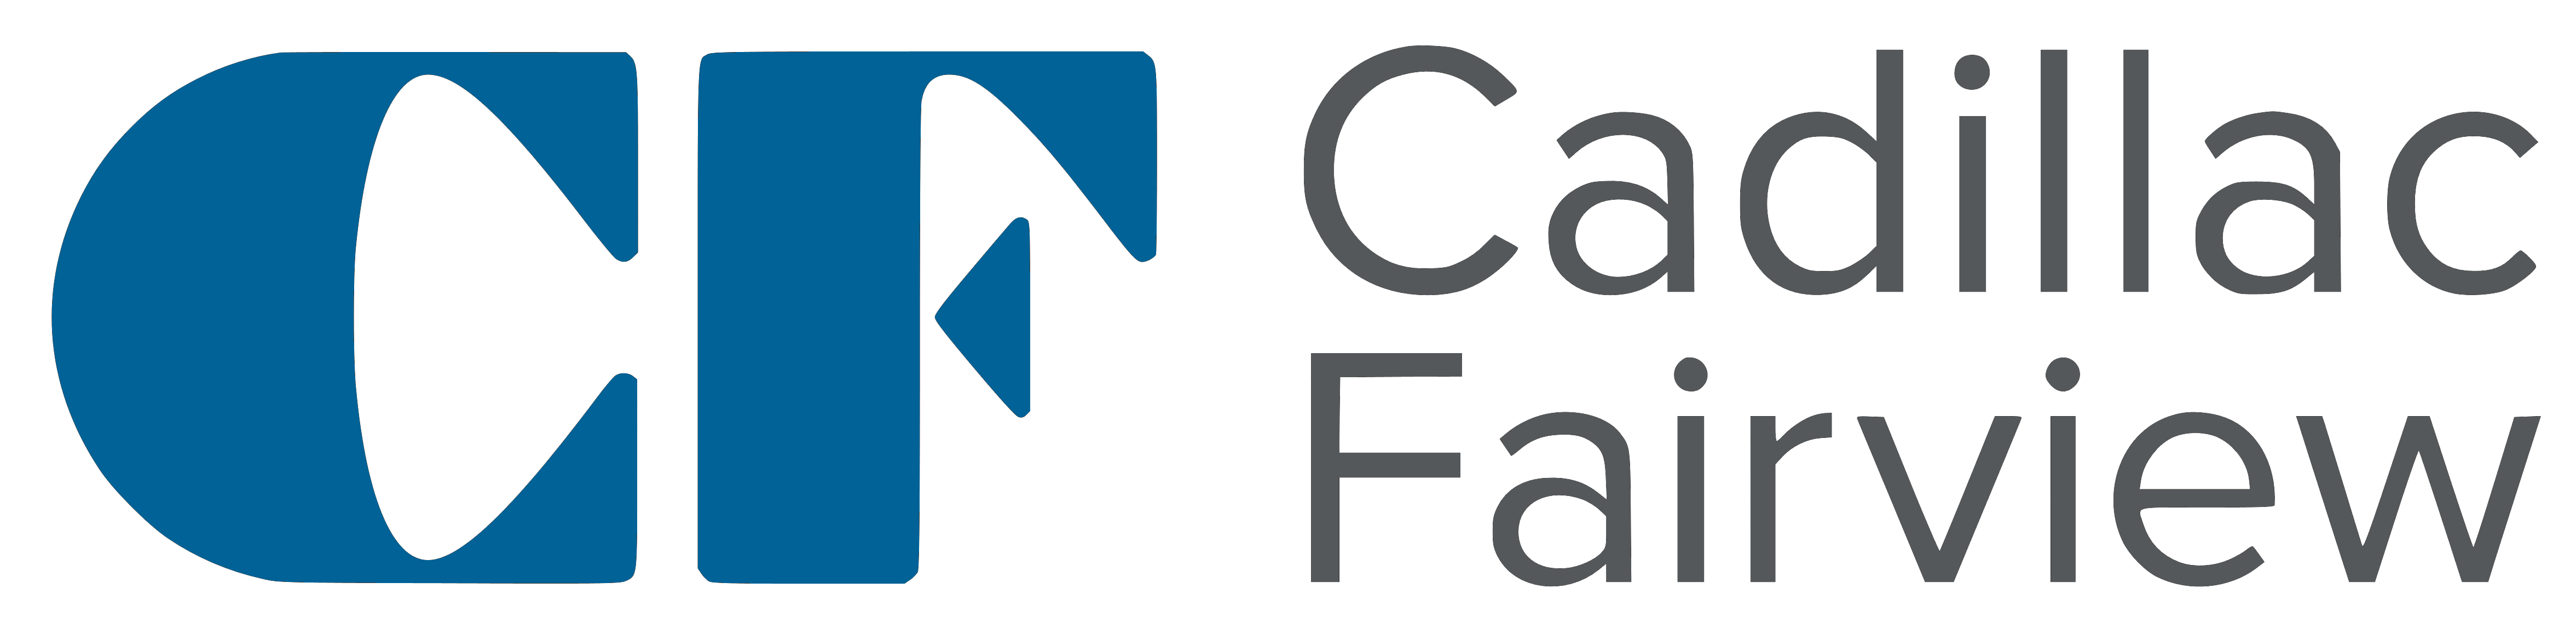 CF Cadillac Fairview – Logos Download